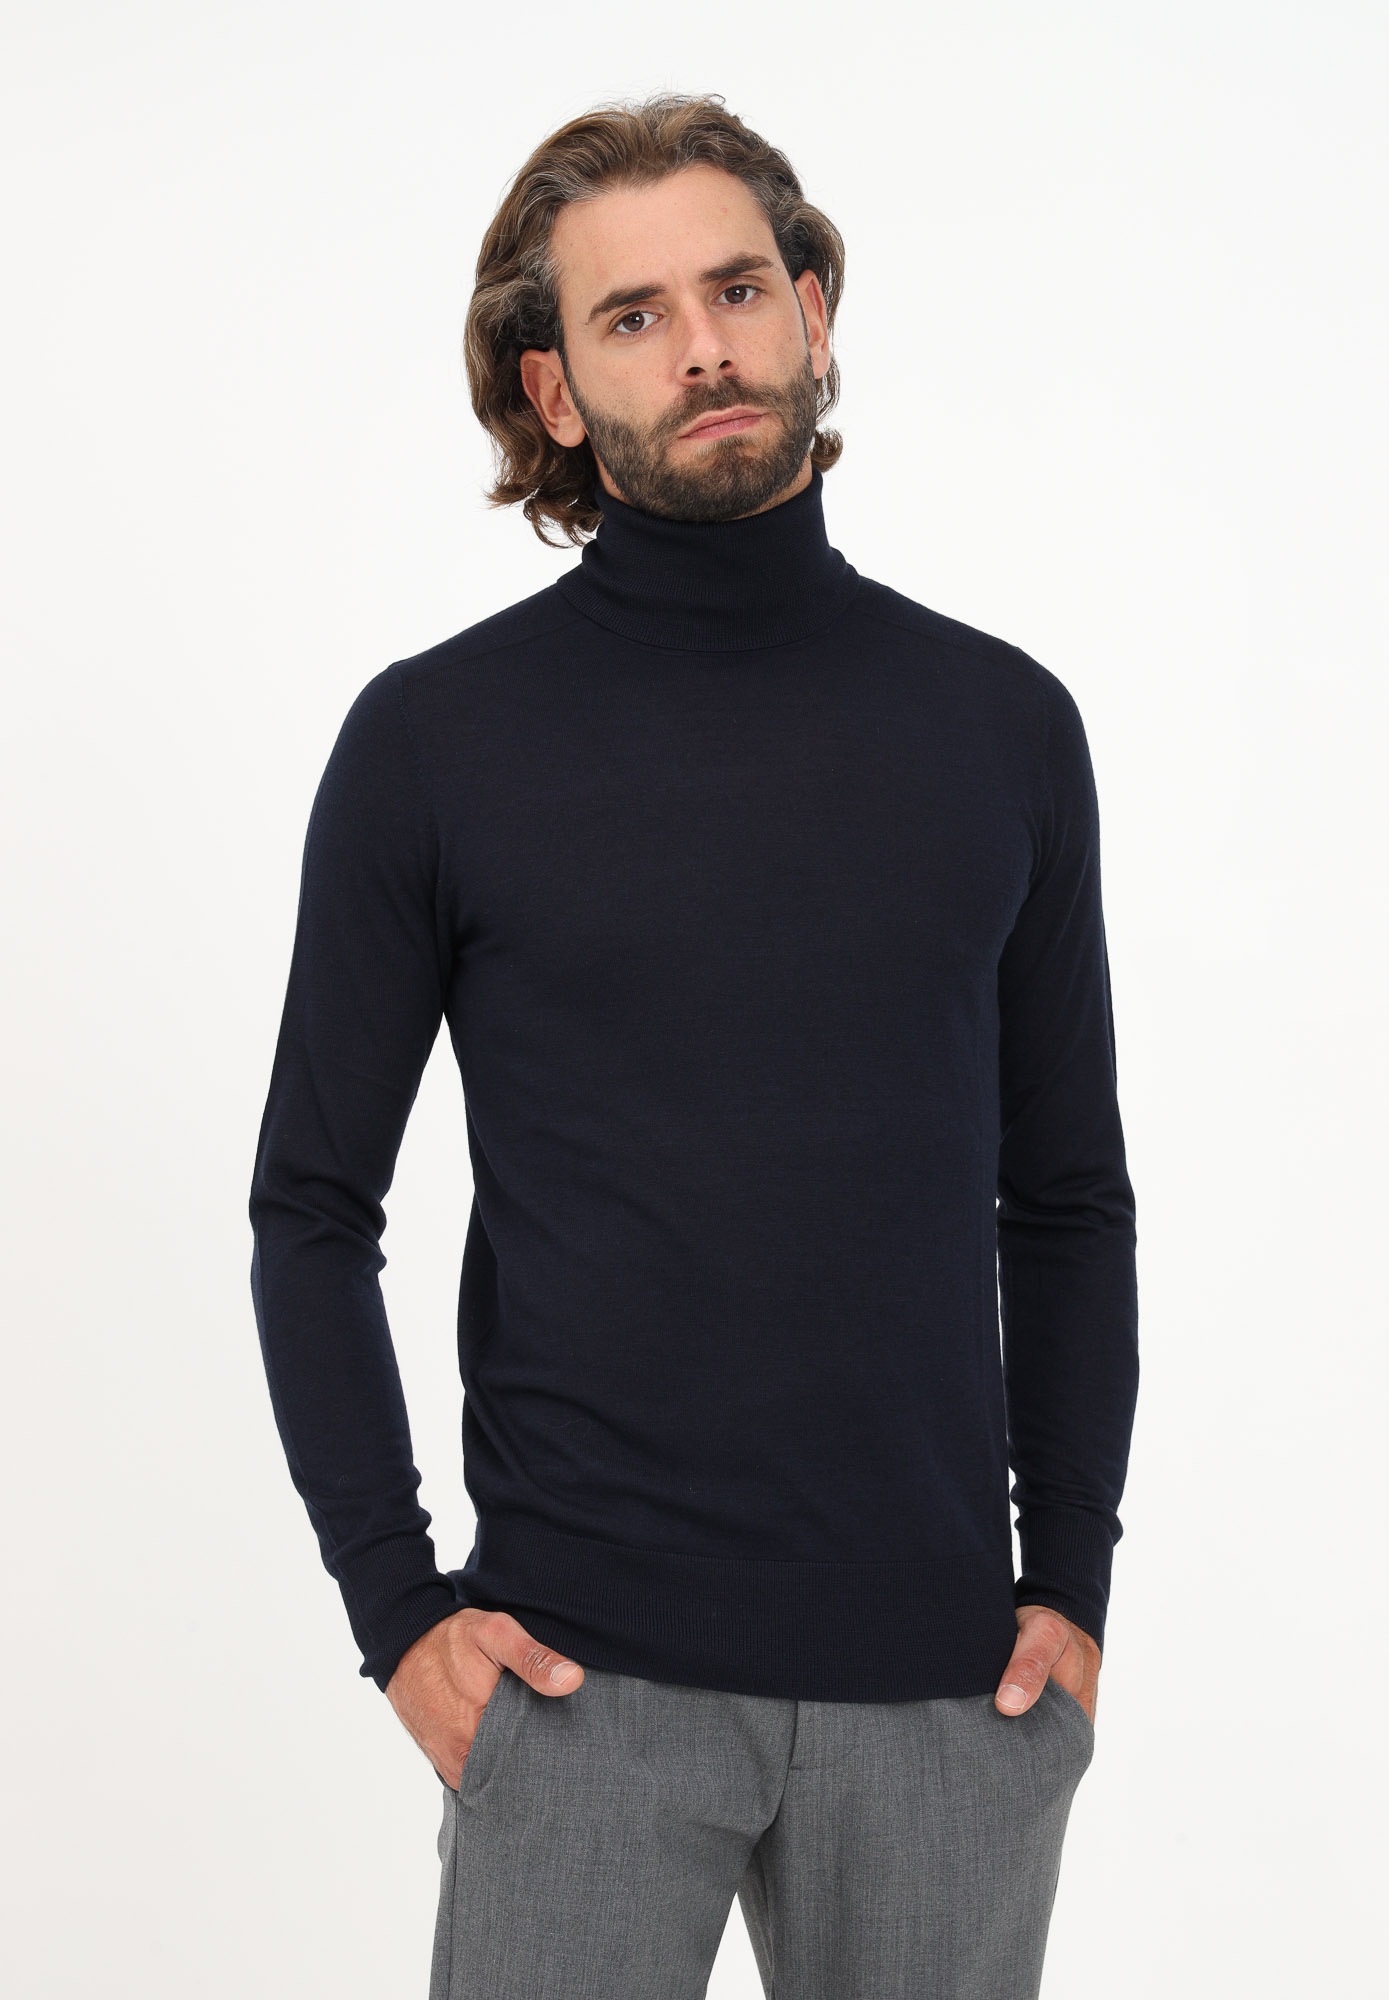 Blue high neck sweater PATRIZIA PEPE | 5K0102-K124C166